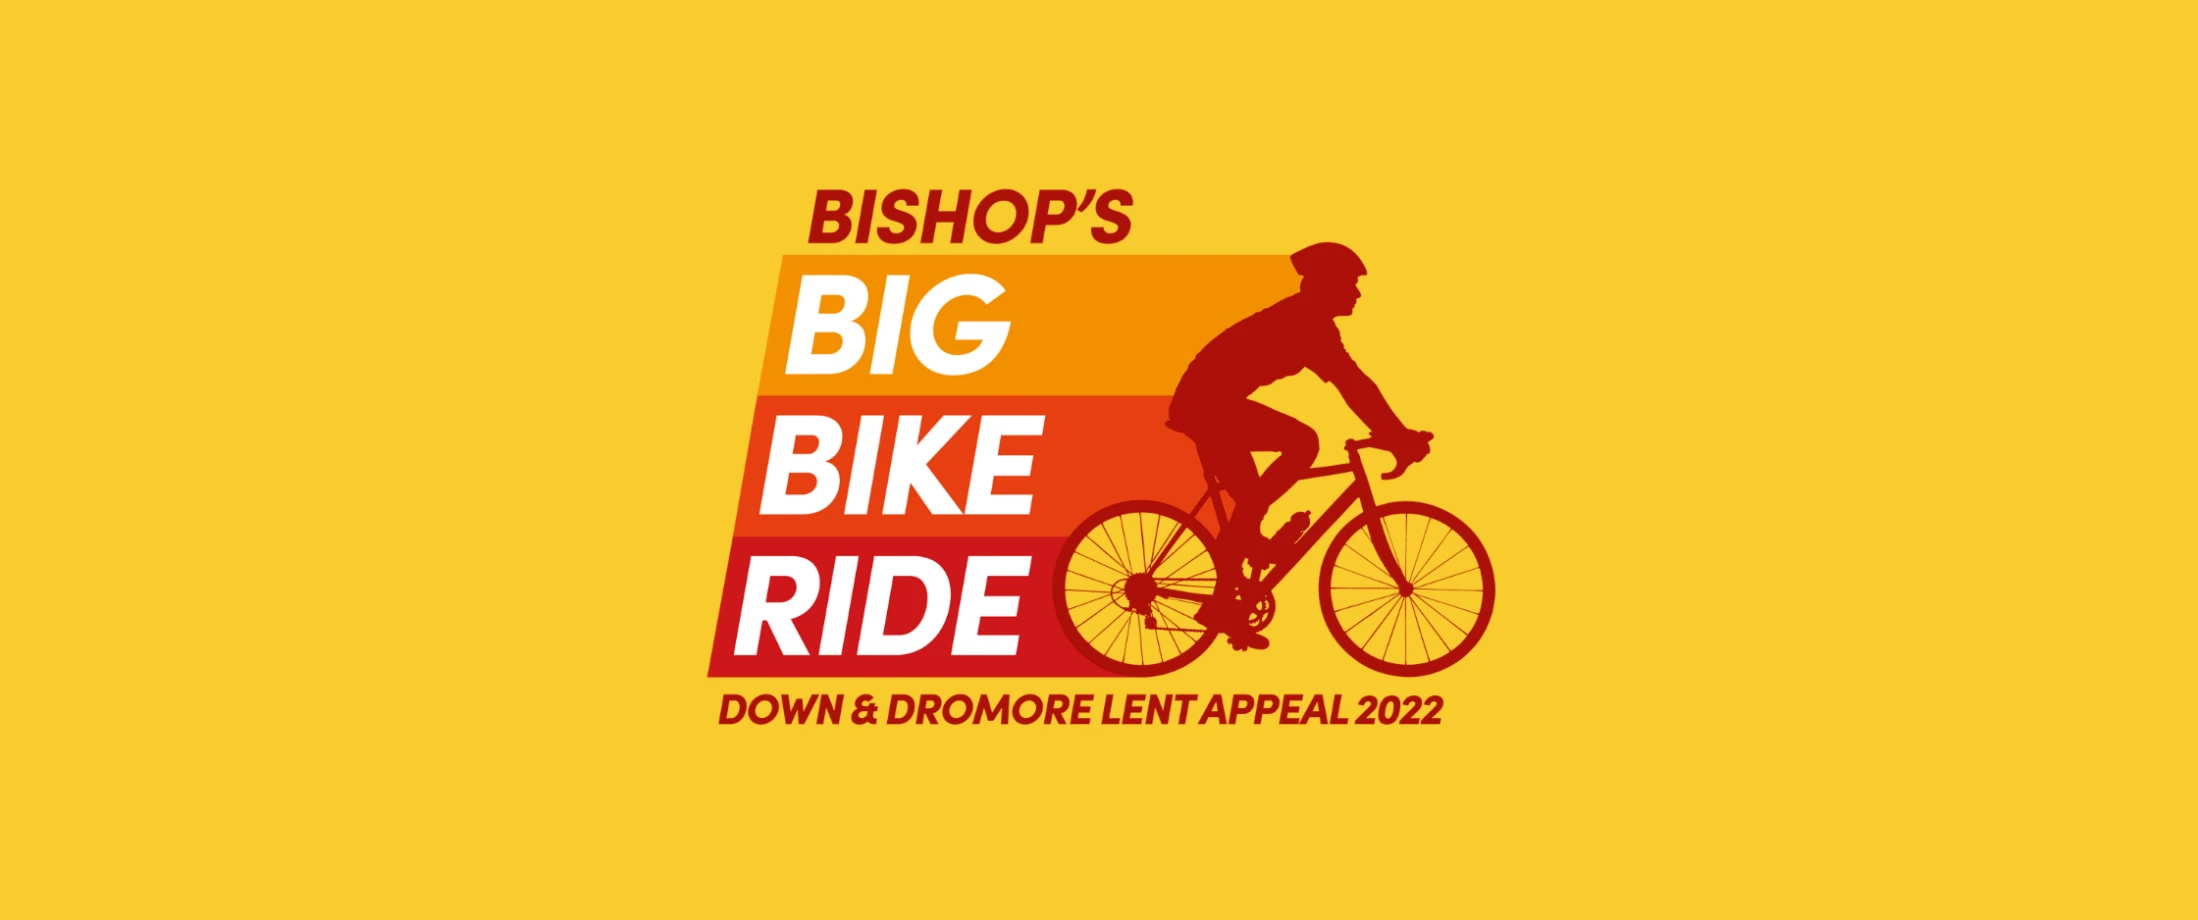 Bishop’s Big Bike Ride